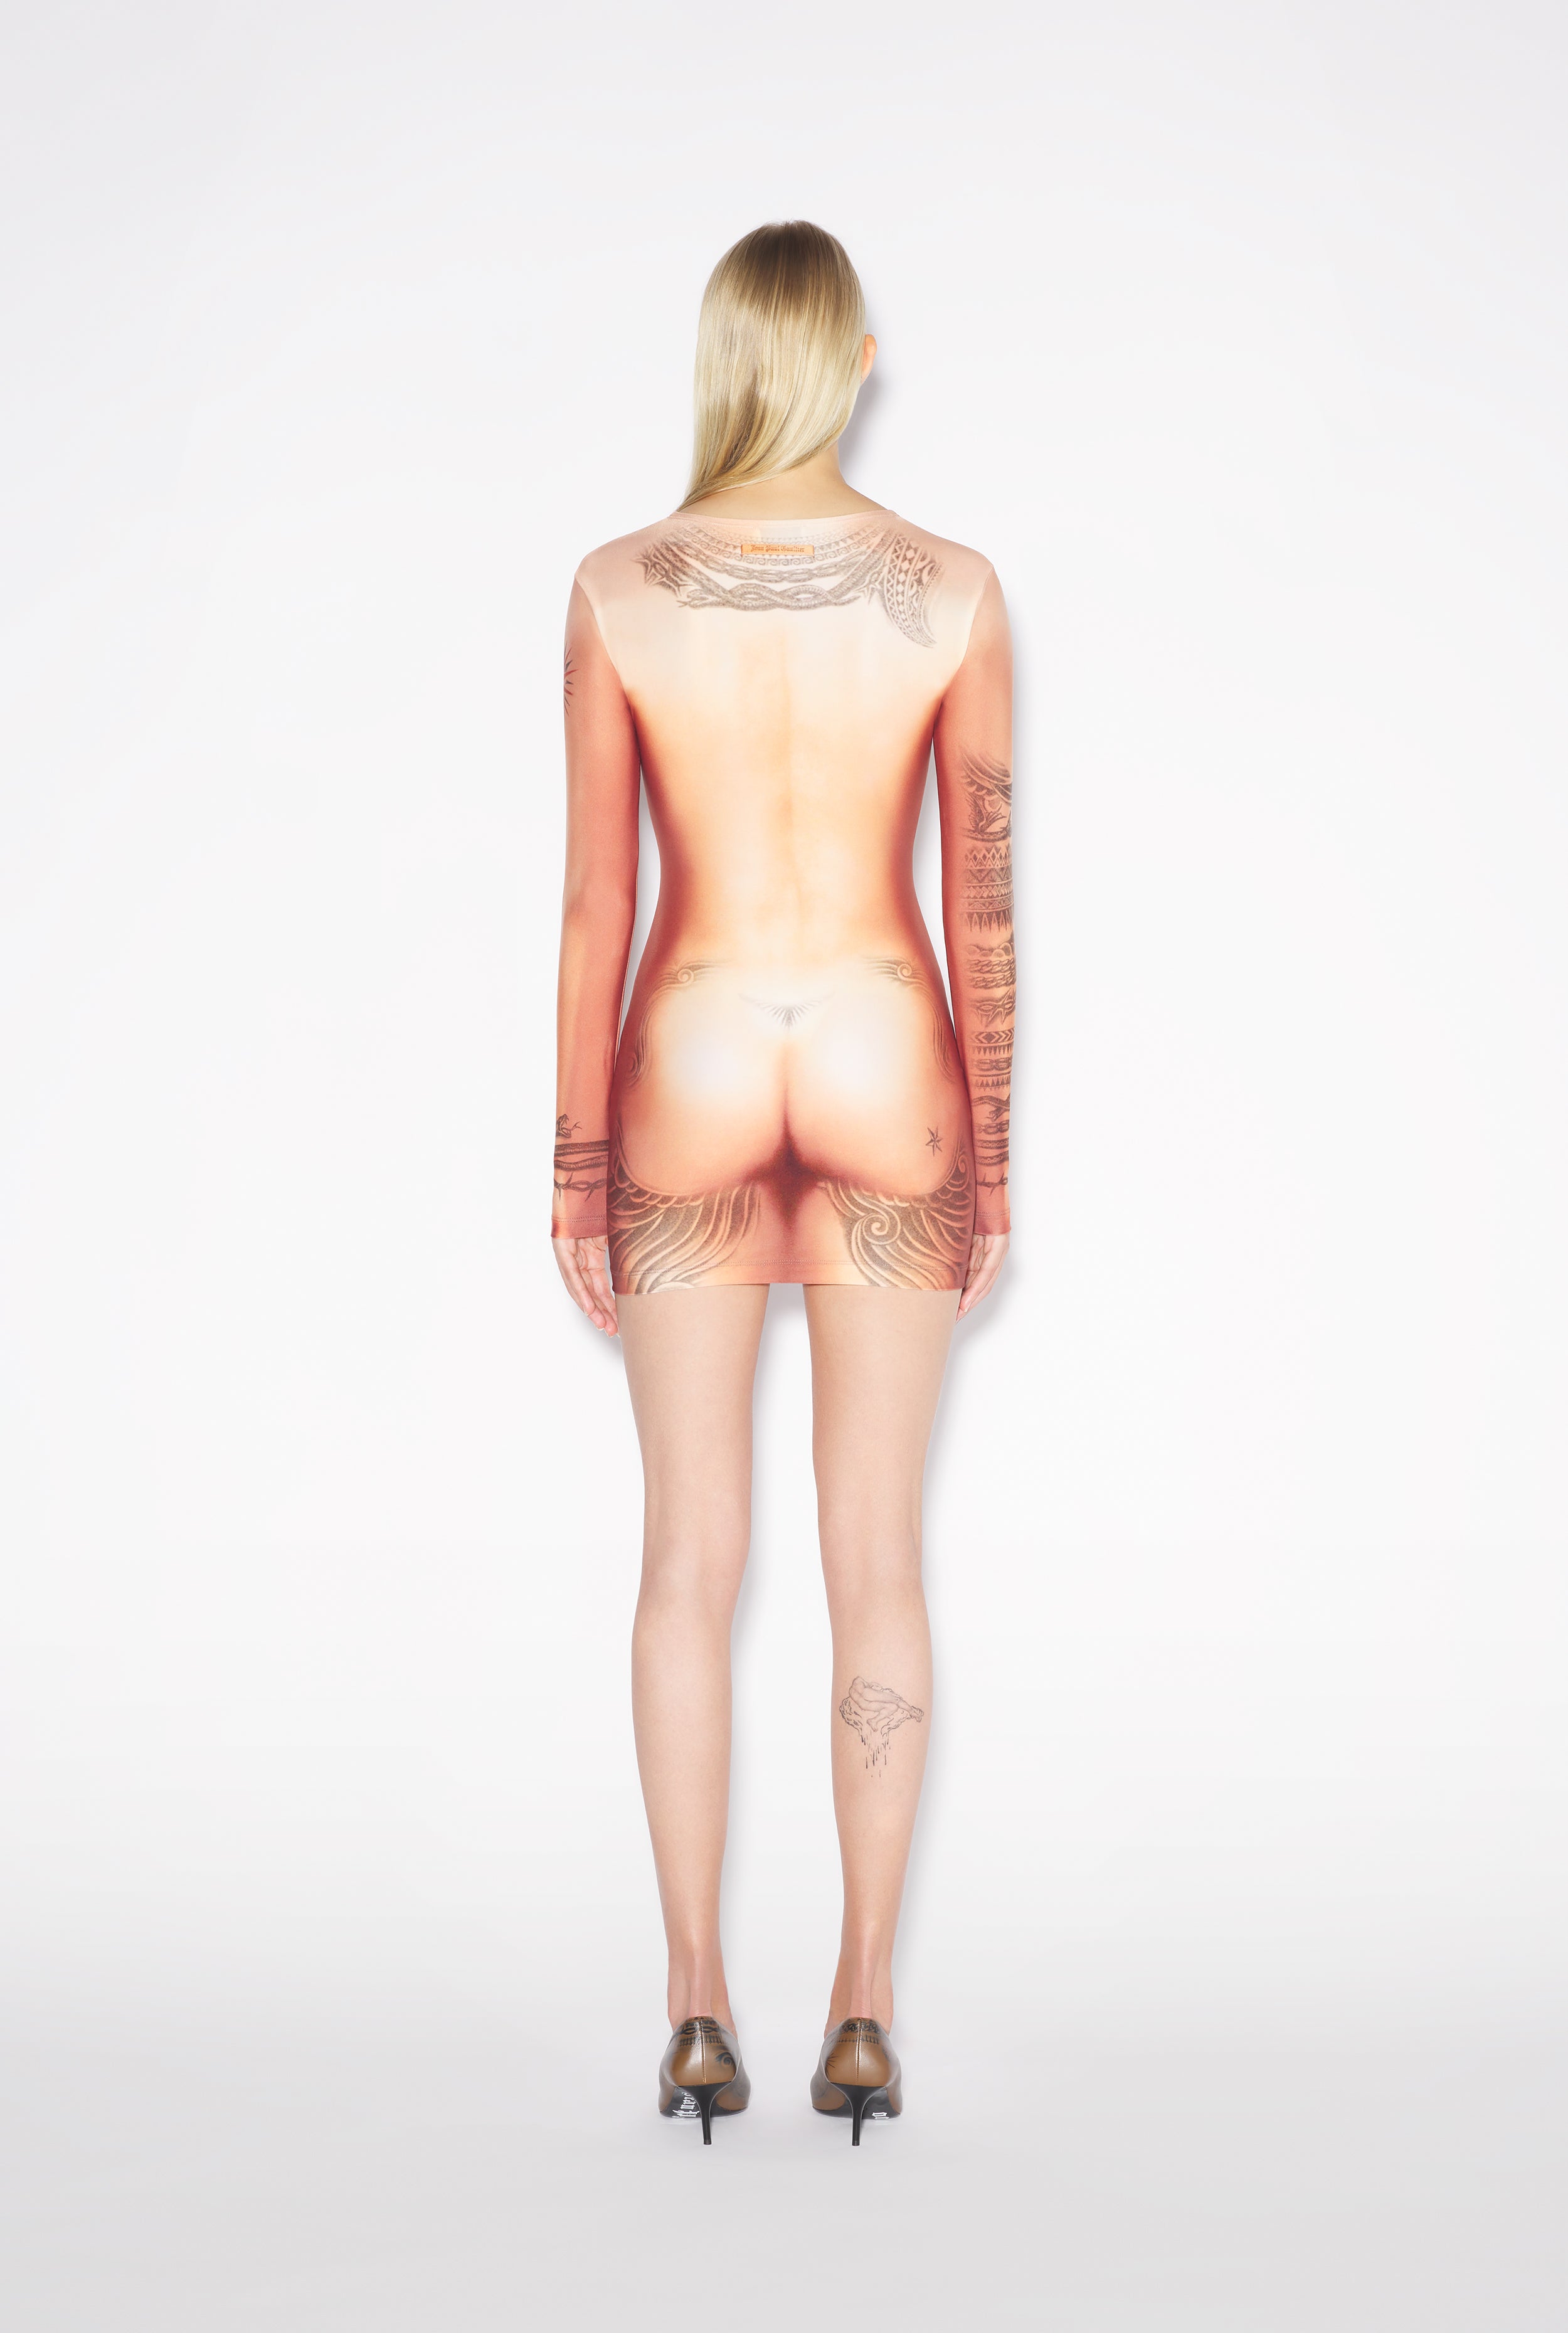 The Short Nude Body Tattoo Dress